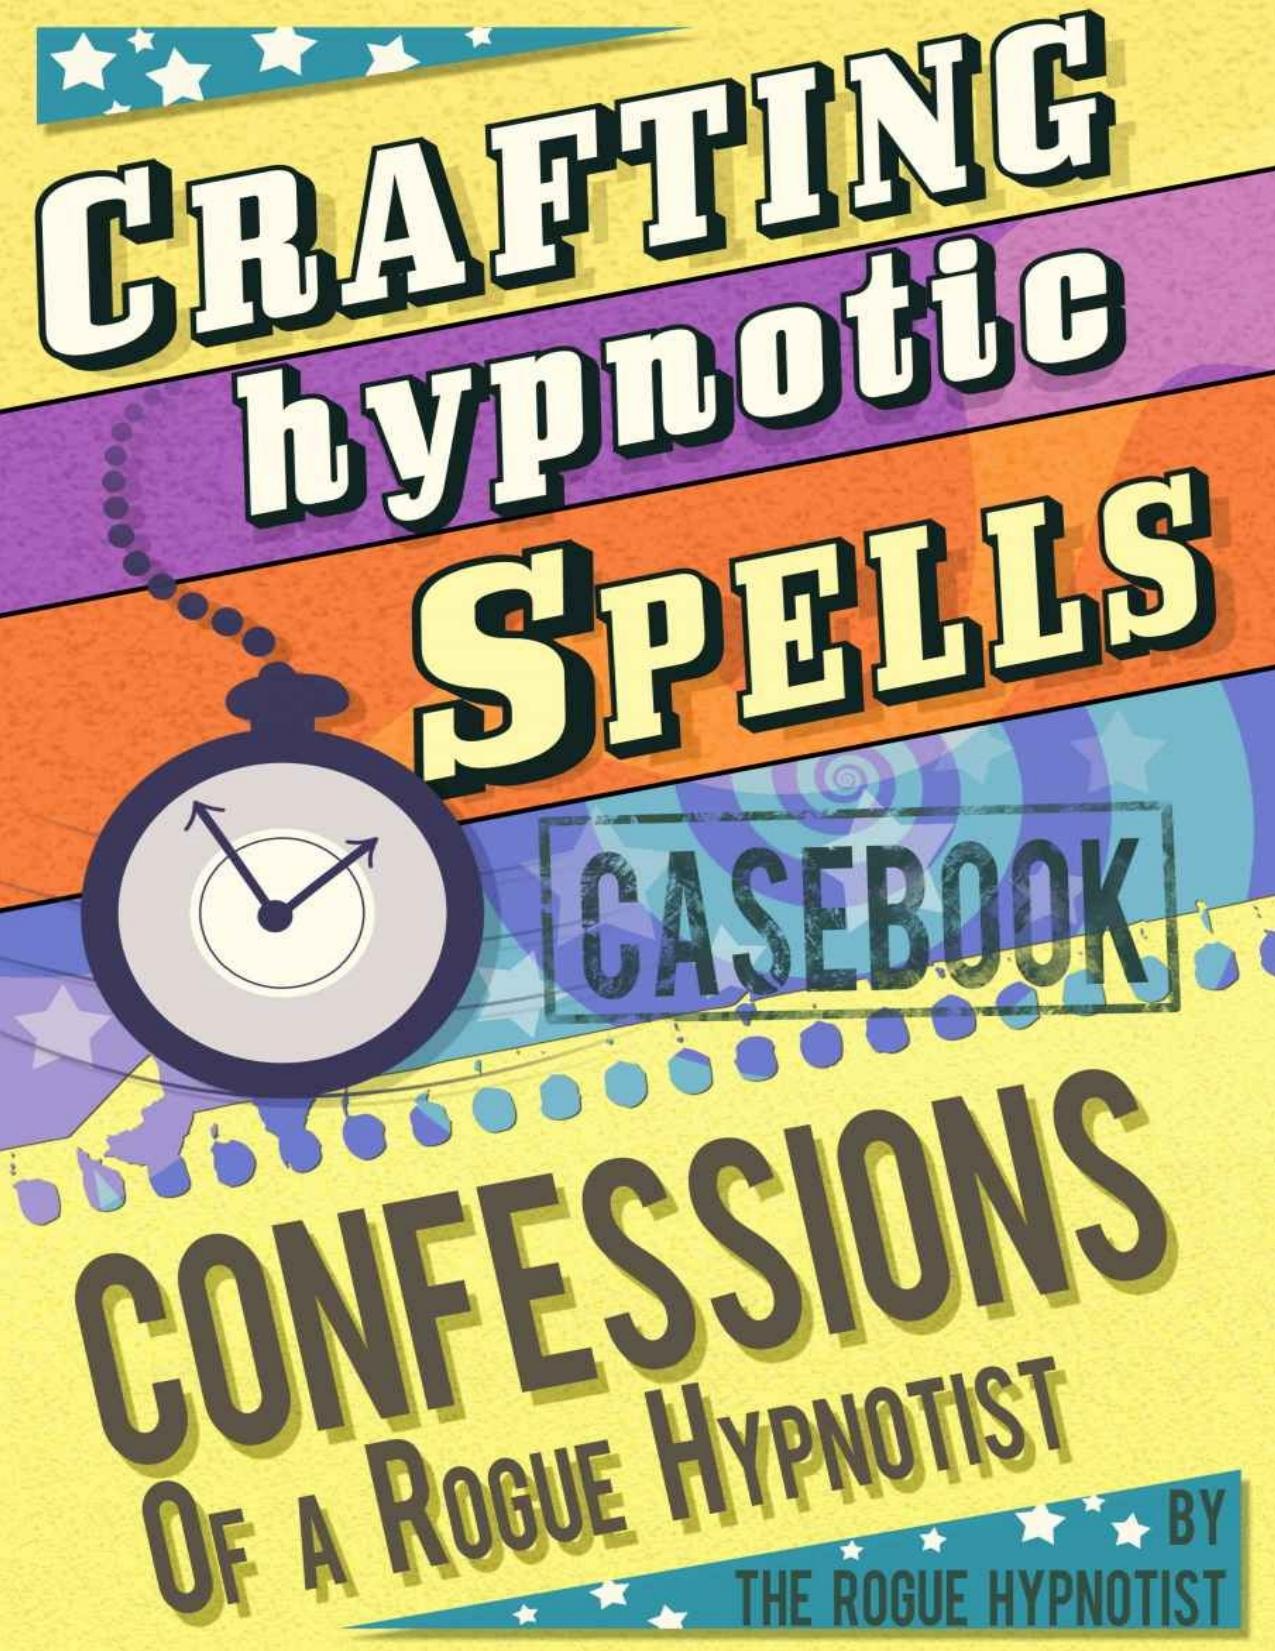 Crafting hypnotic spells! - Casebook confessions of a Rogue Hypnotist by The Rogue Hypnotist